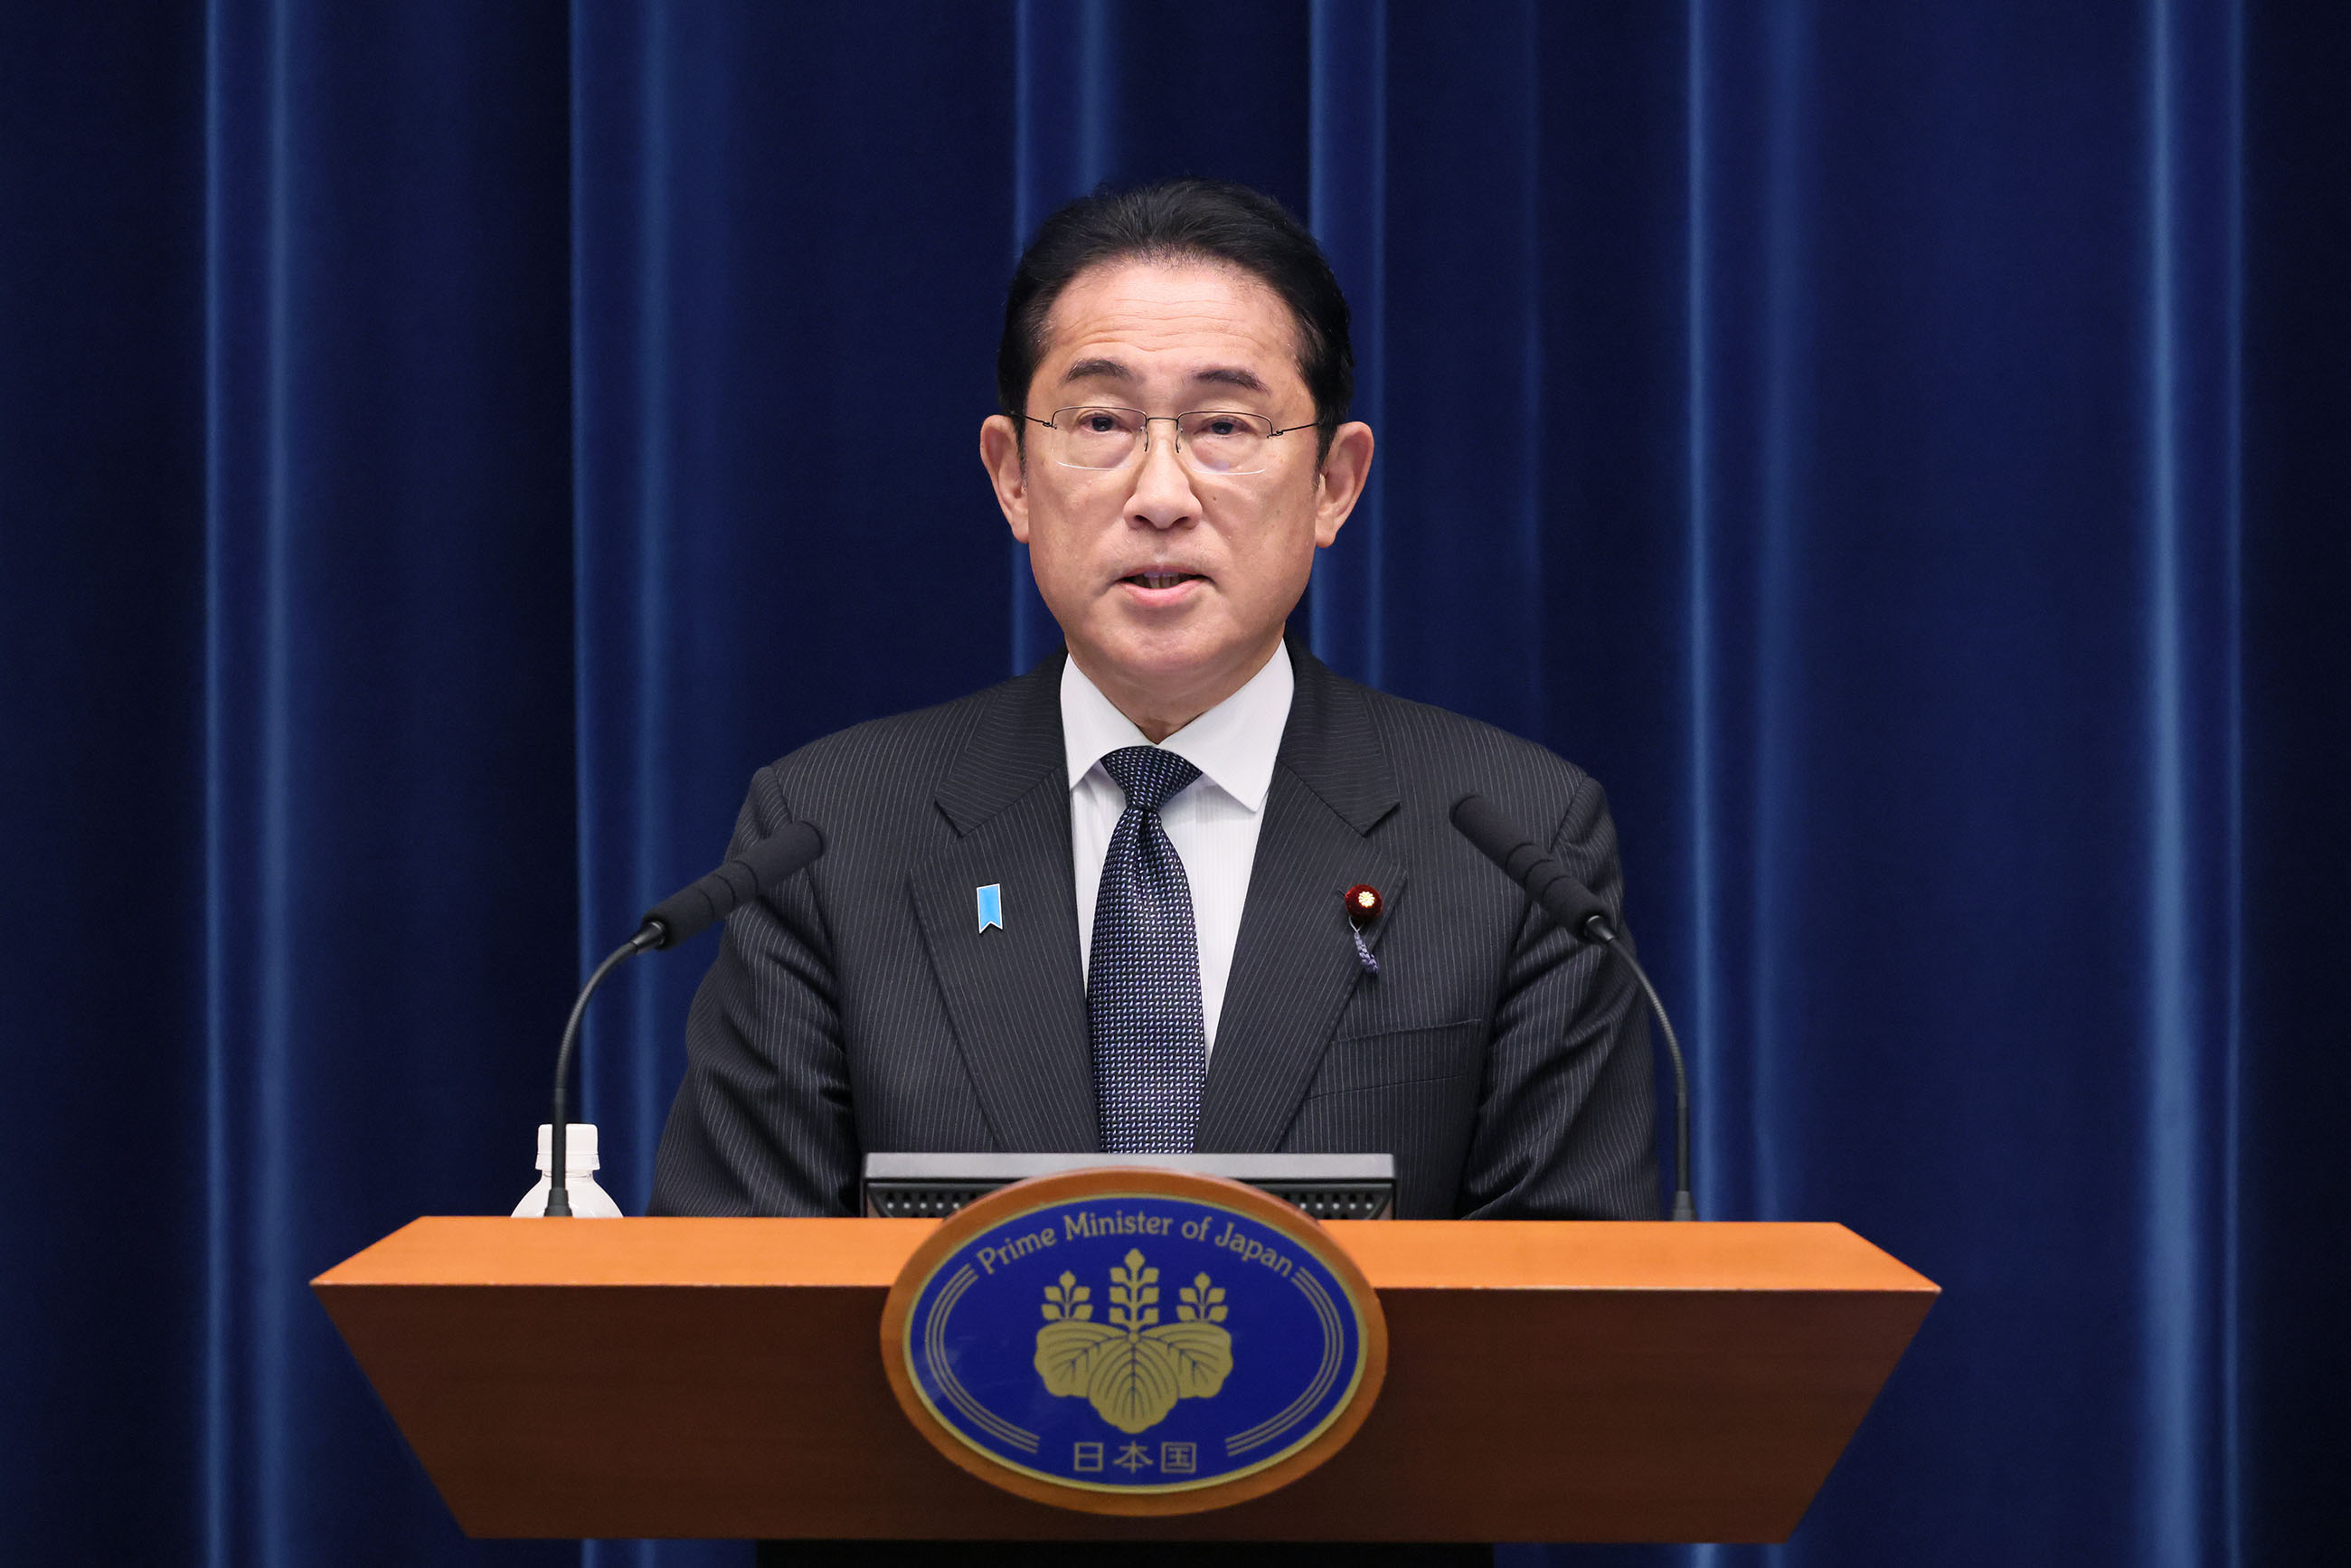 Prime Minister Kishida making an opening statement (1)